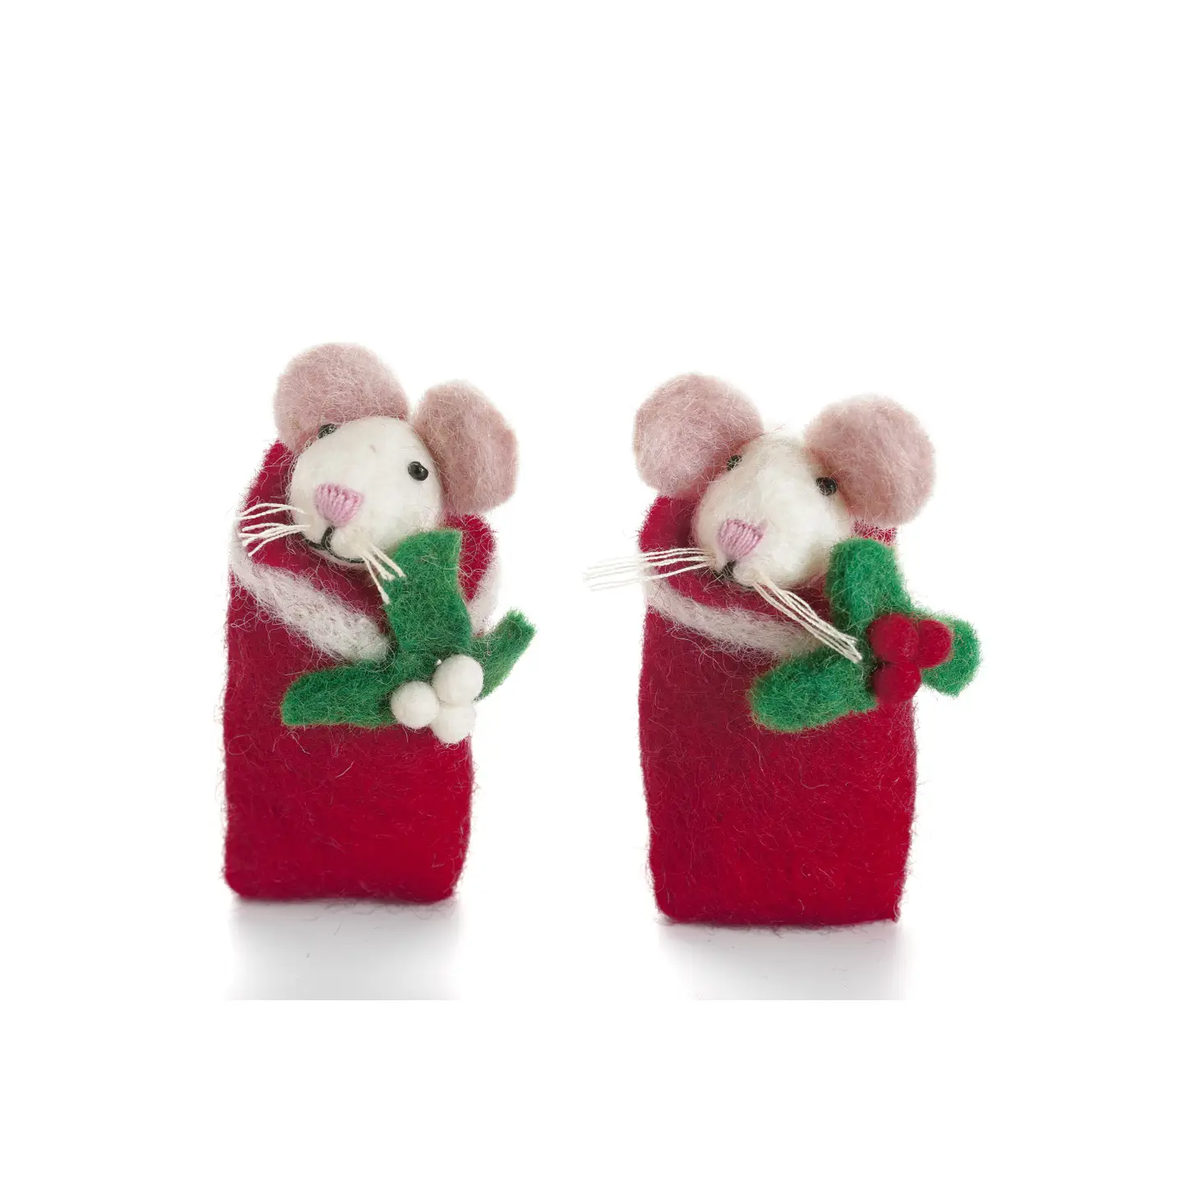 NEW Wool Felt: Swaddling Mice with Holly & Mistletoe